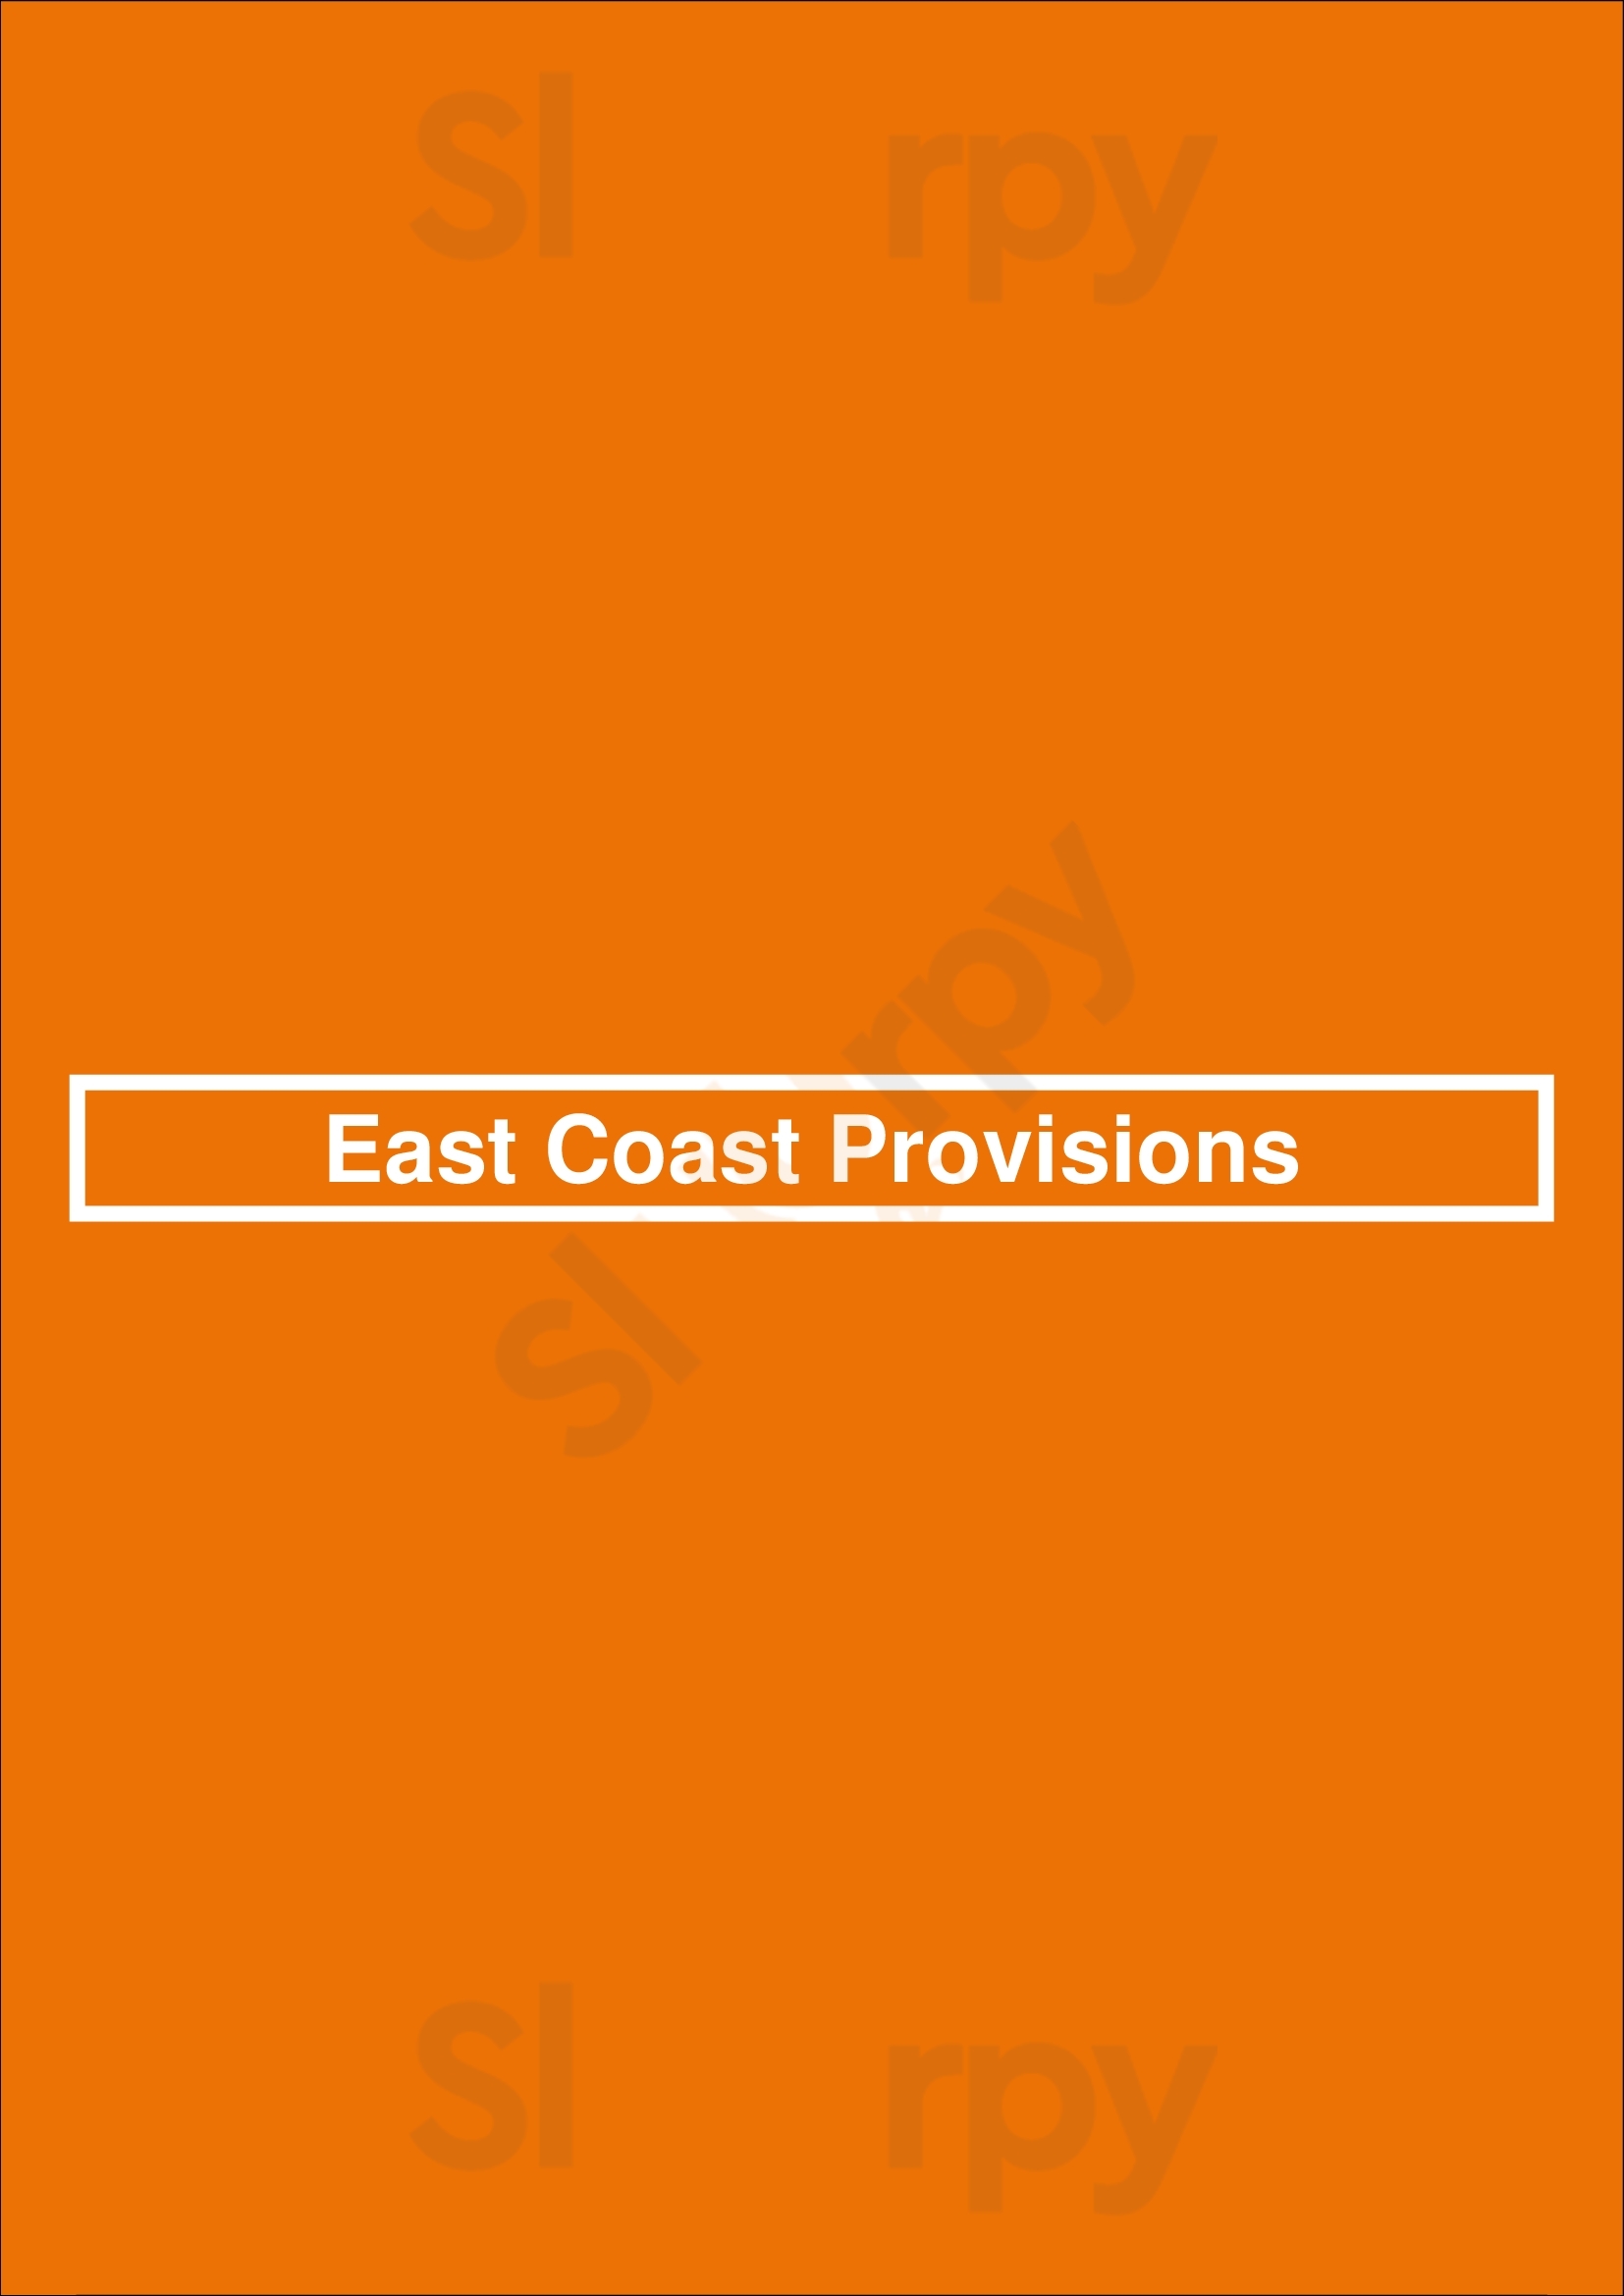 East Coast Provisions Richmond Menu - 1